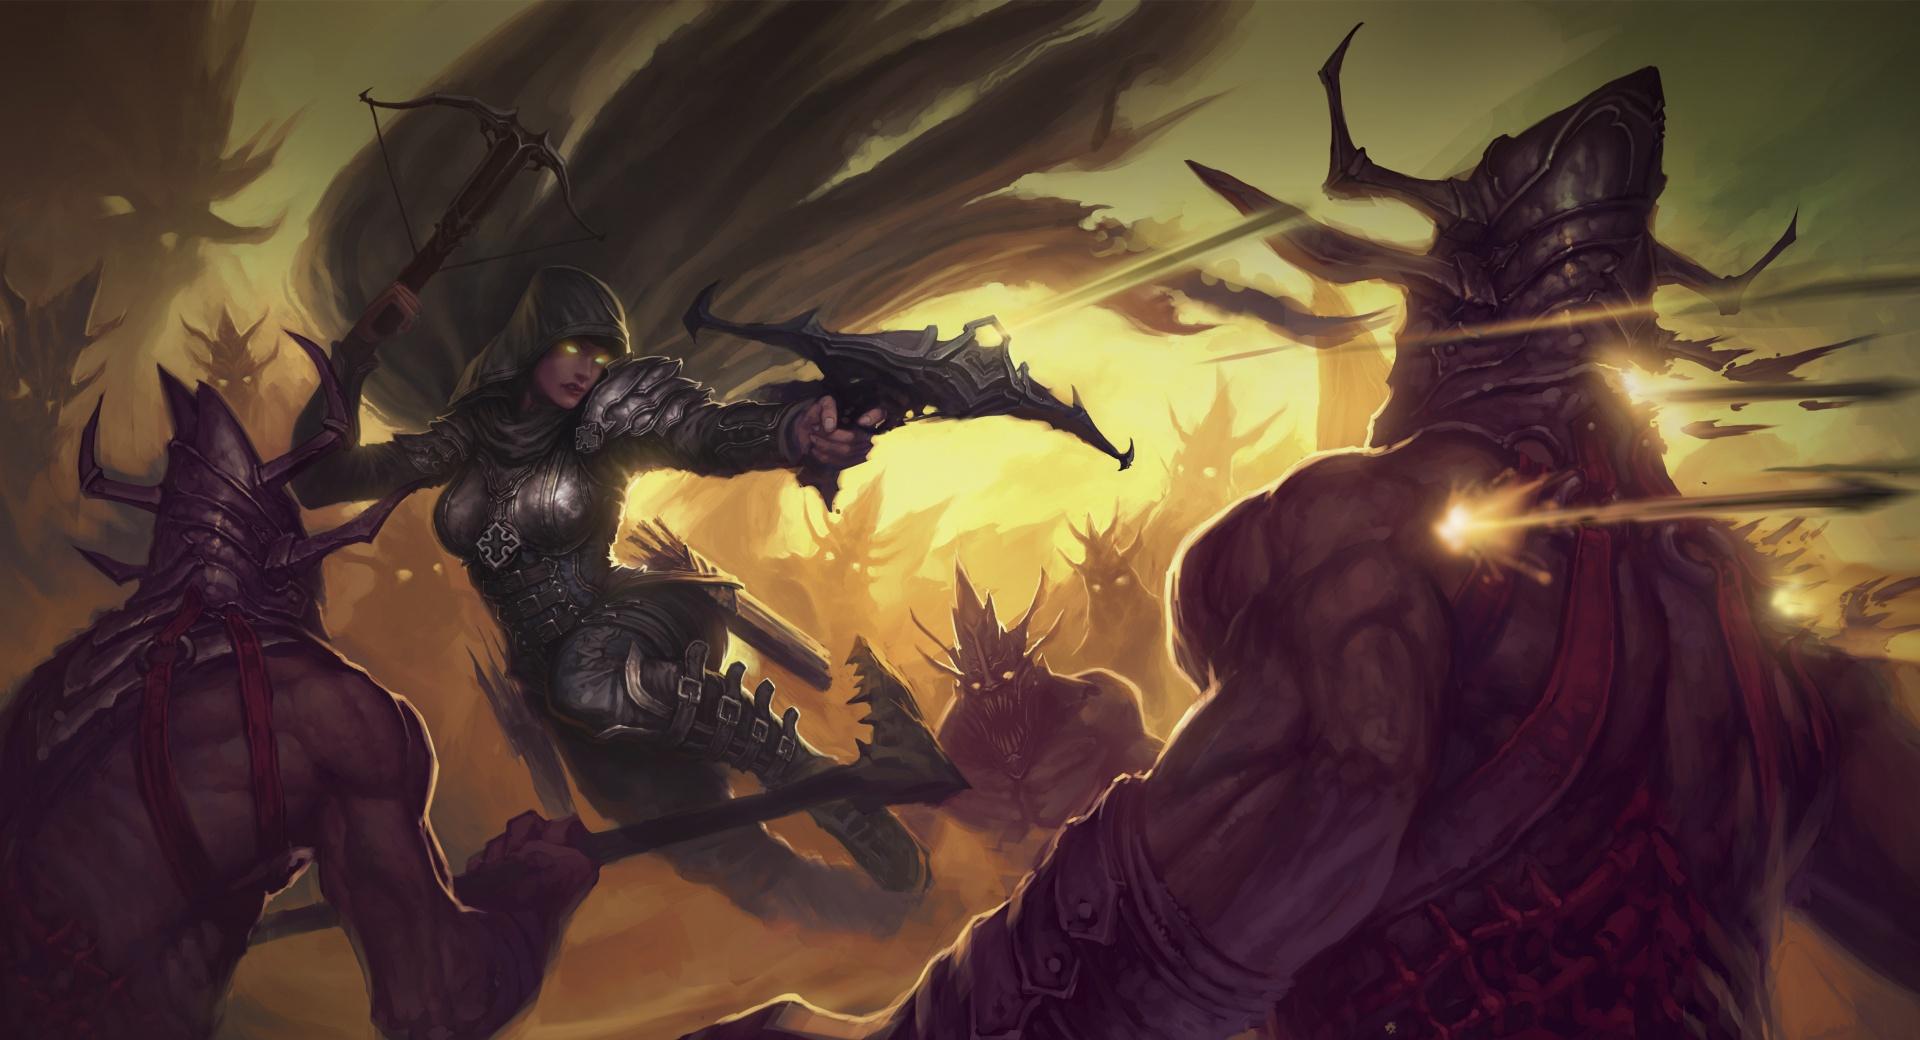 Diablo 3 Demon Hunter at 1600 x 1200 size wallpapers HD quality